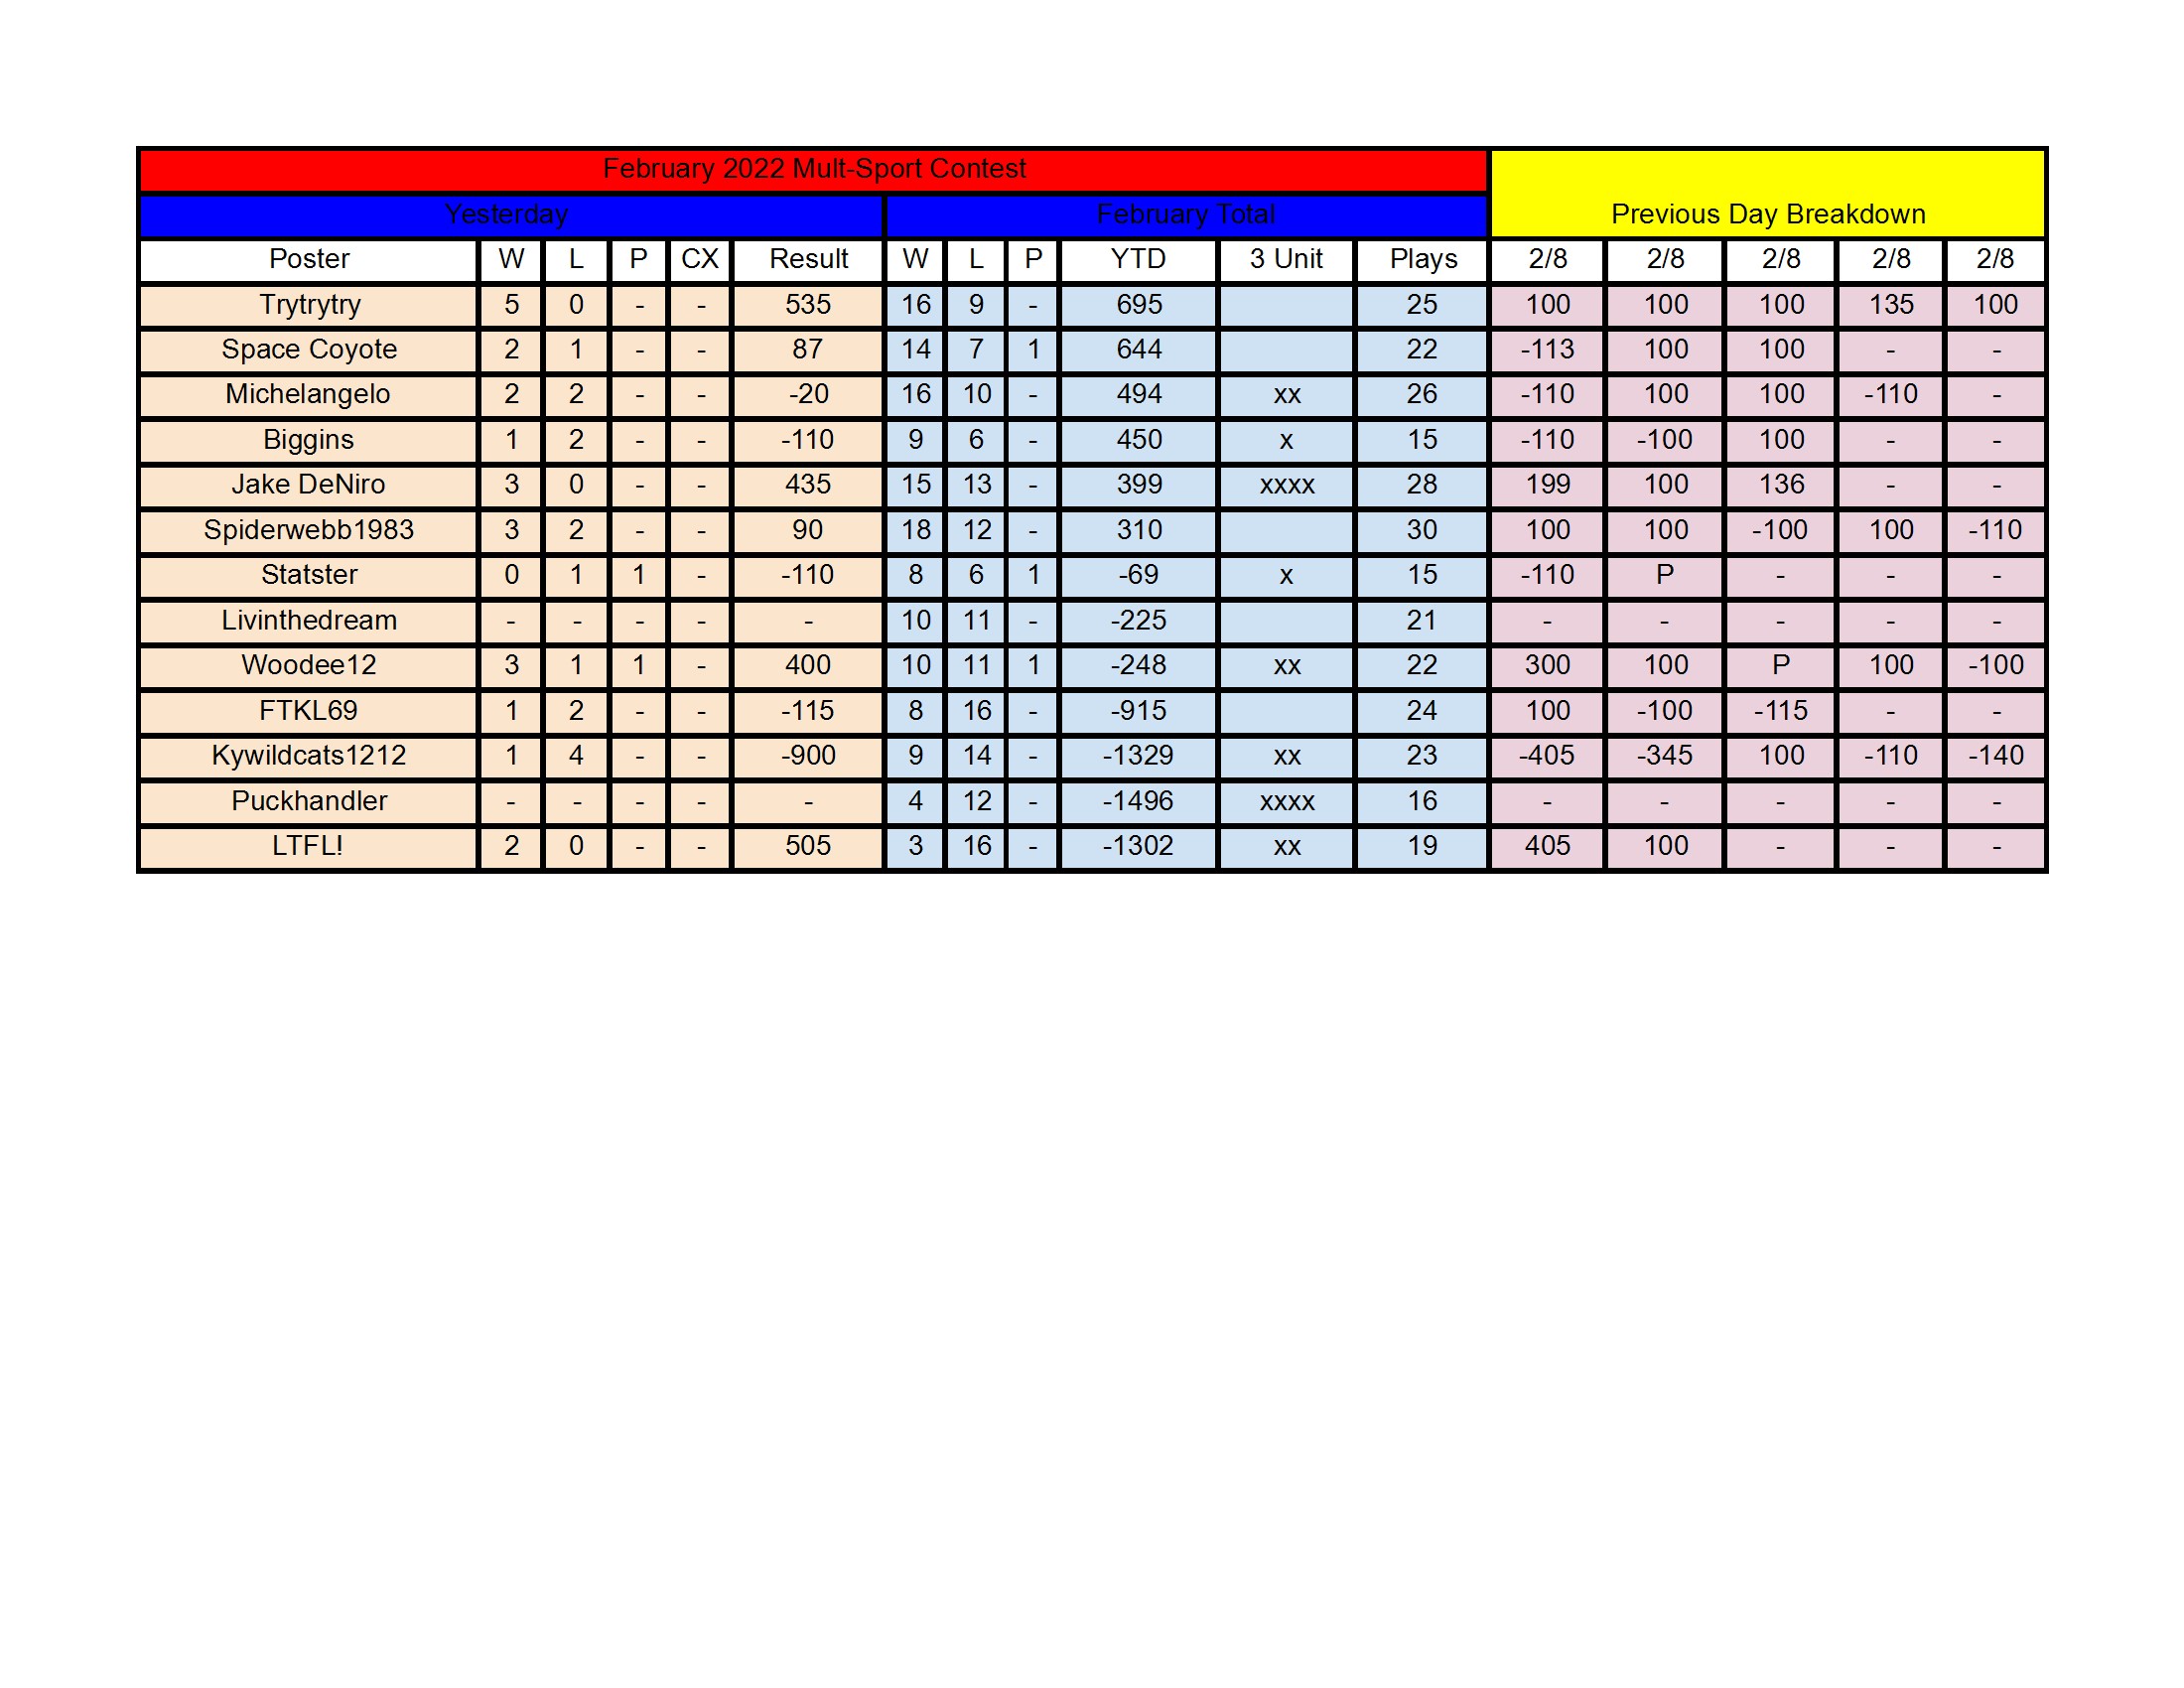 February Standings - 2_8 conv 1.jpeg